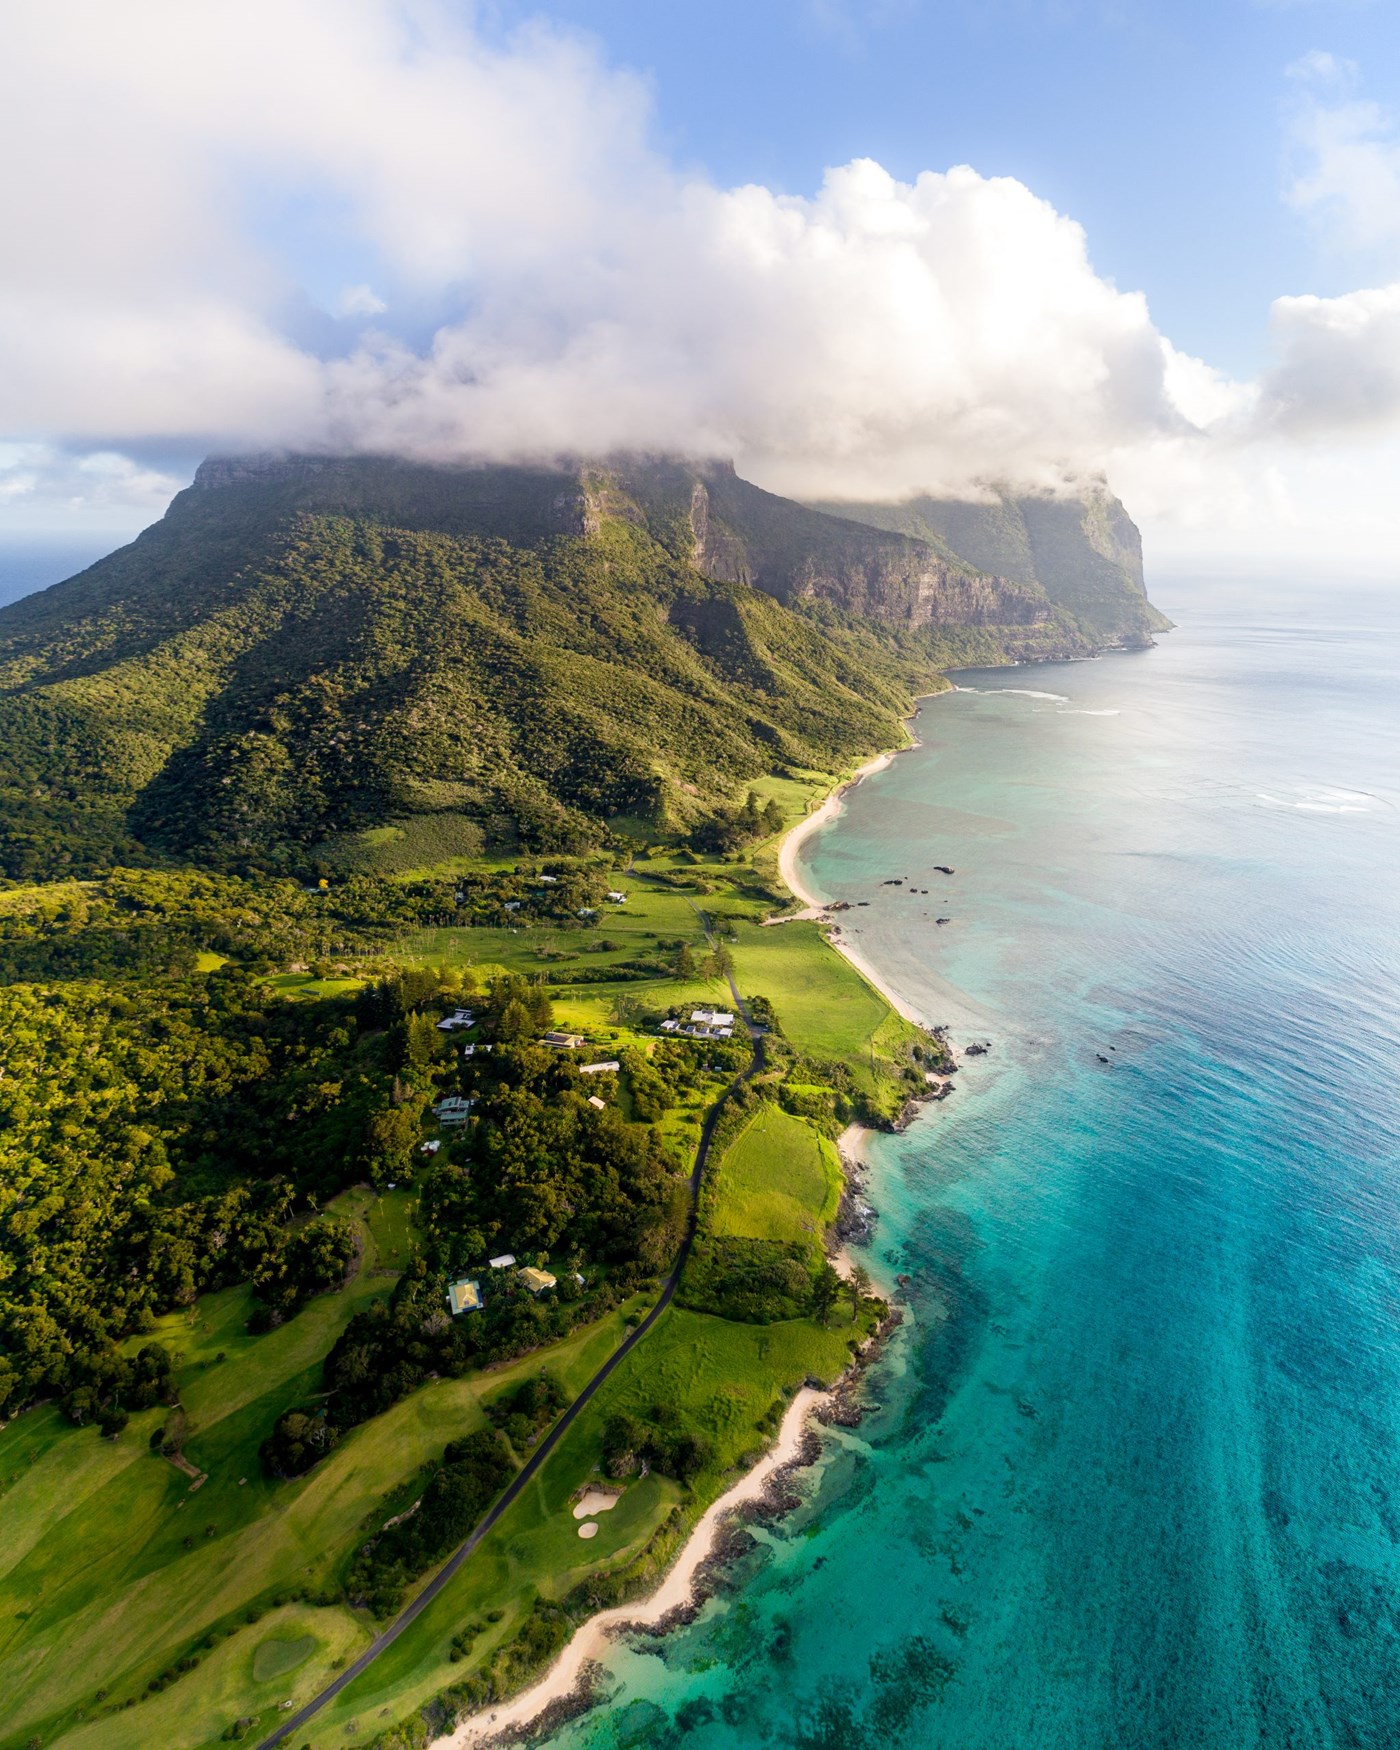 Lord Howe Island Tourism Association